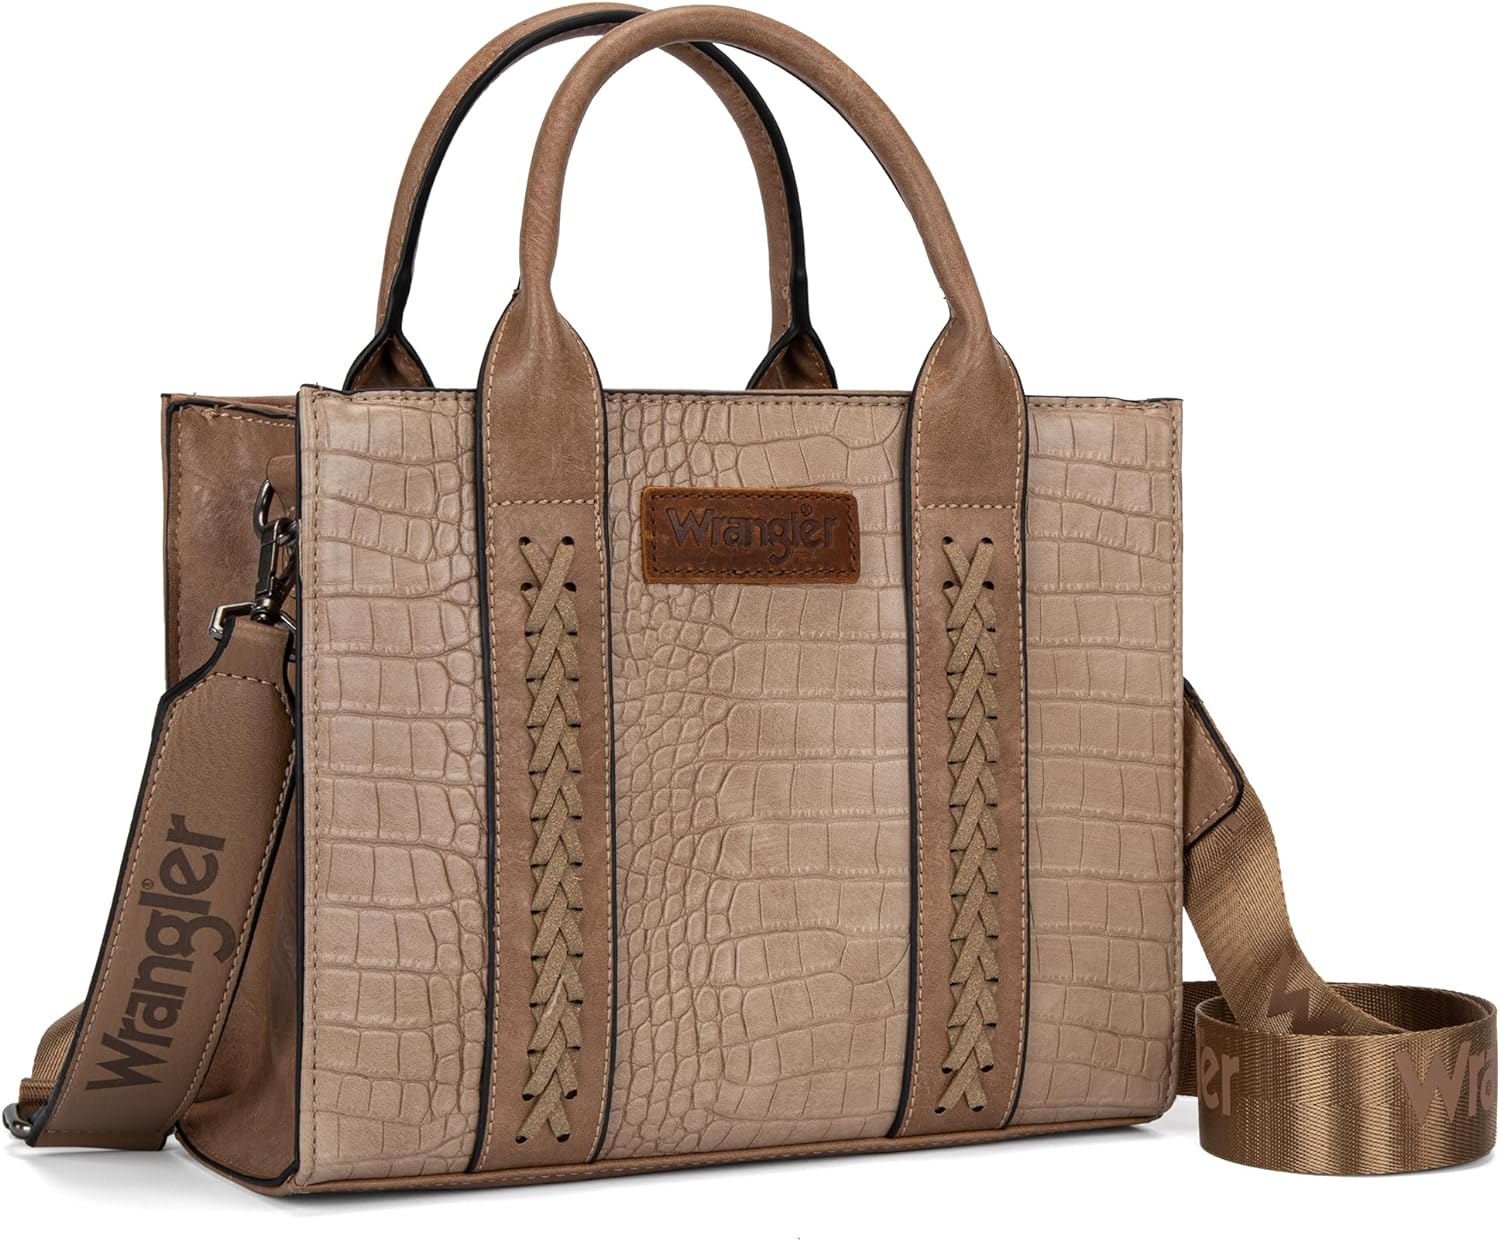 Wrangler Tote Bag for Women Designer Satchel Handbags Top-handle Purses with Strap